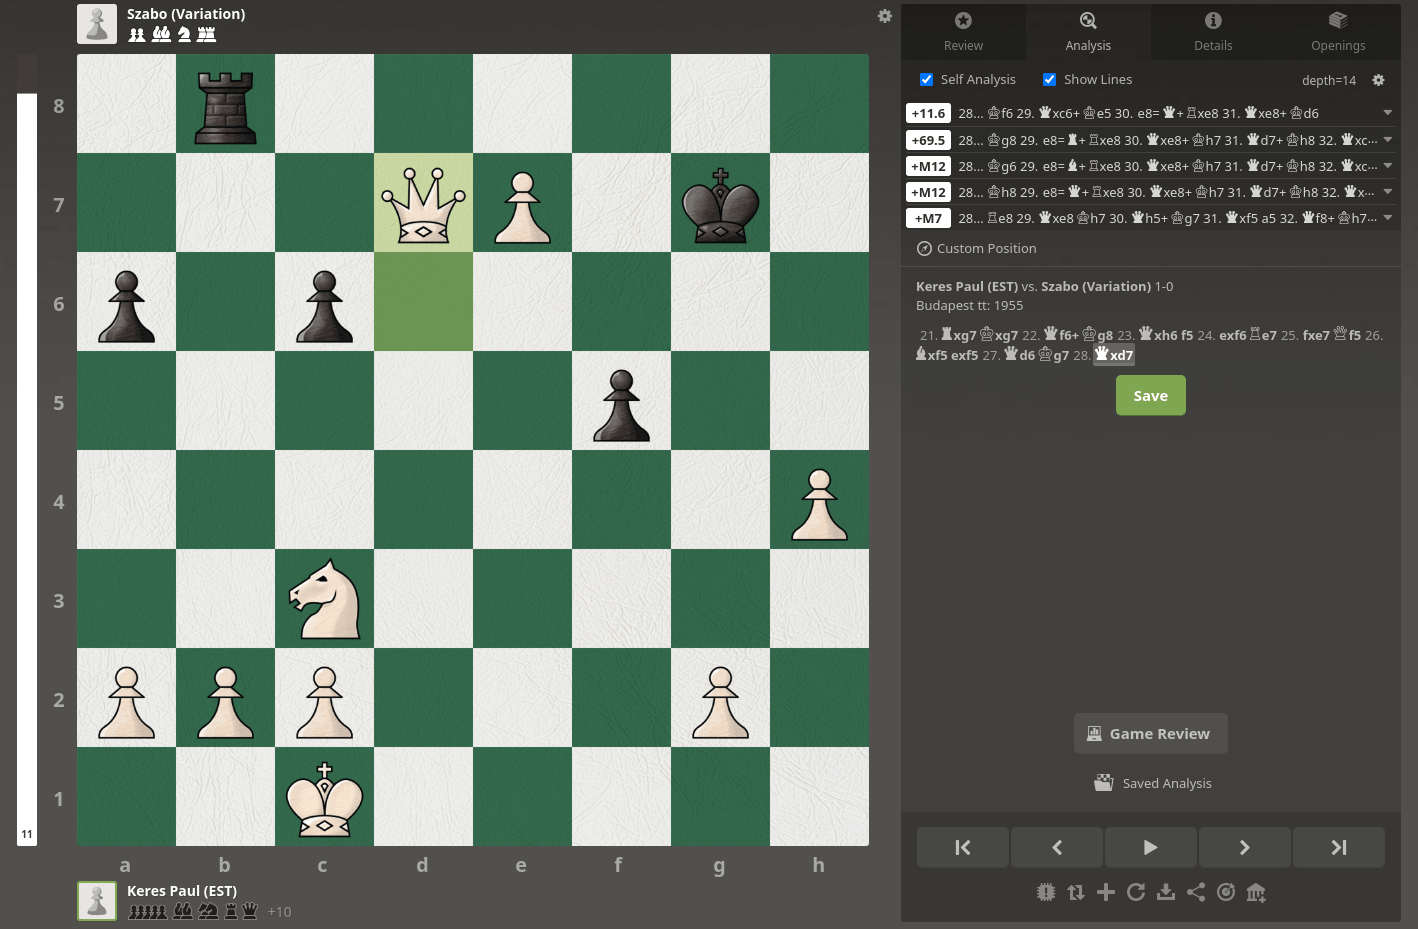 Worst 2700 On Chess.com 